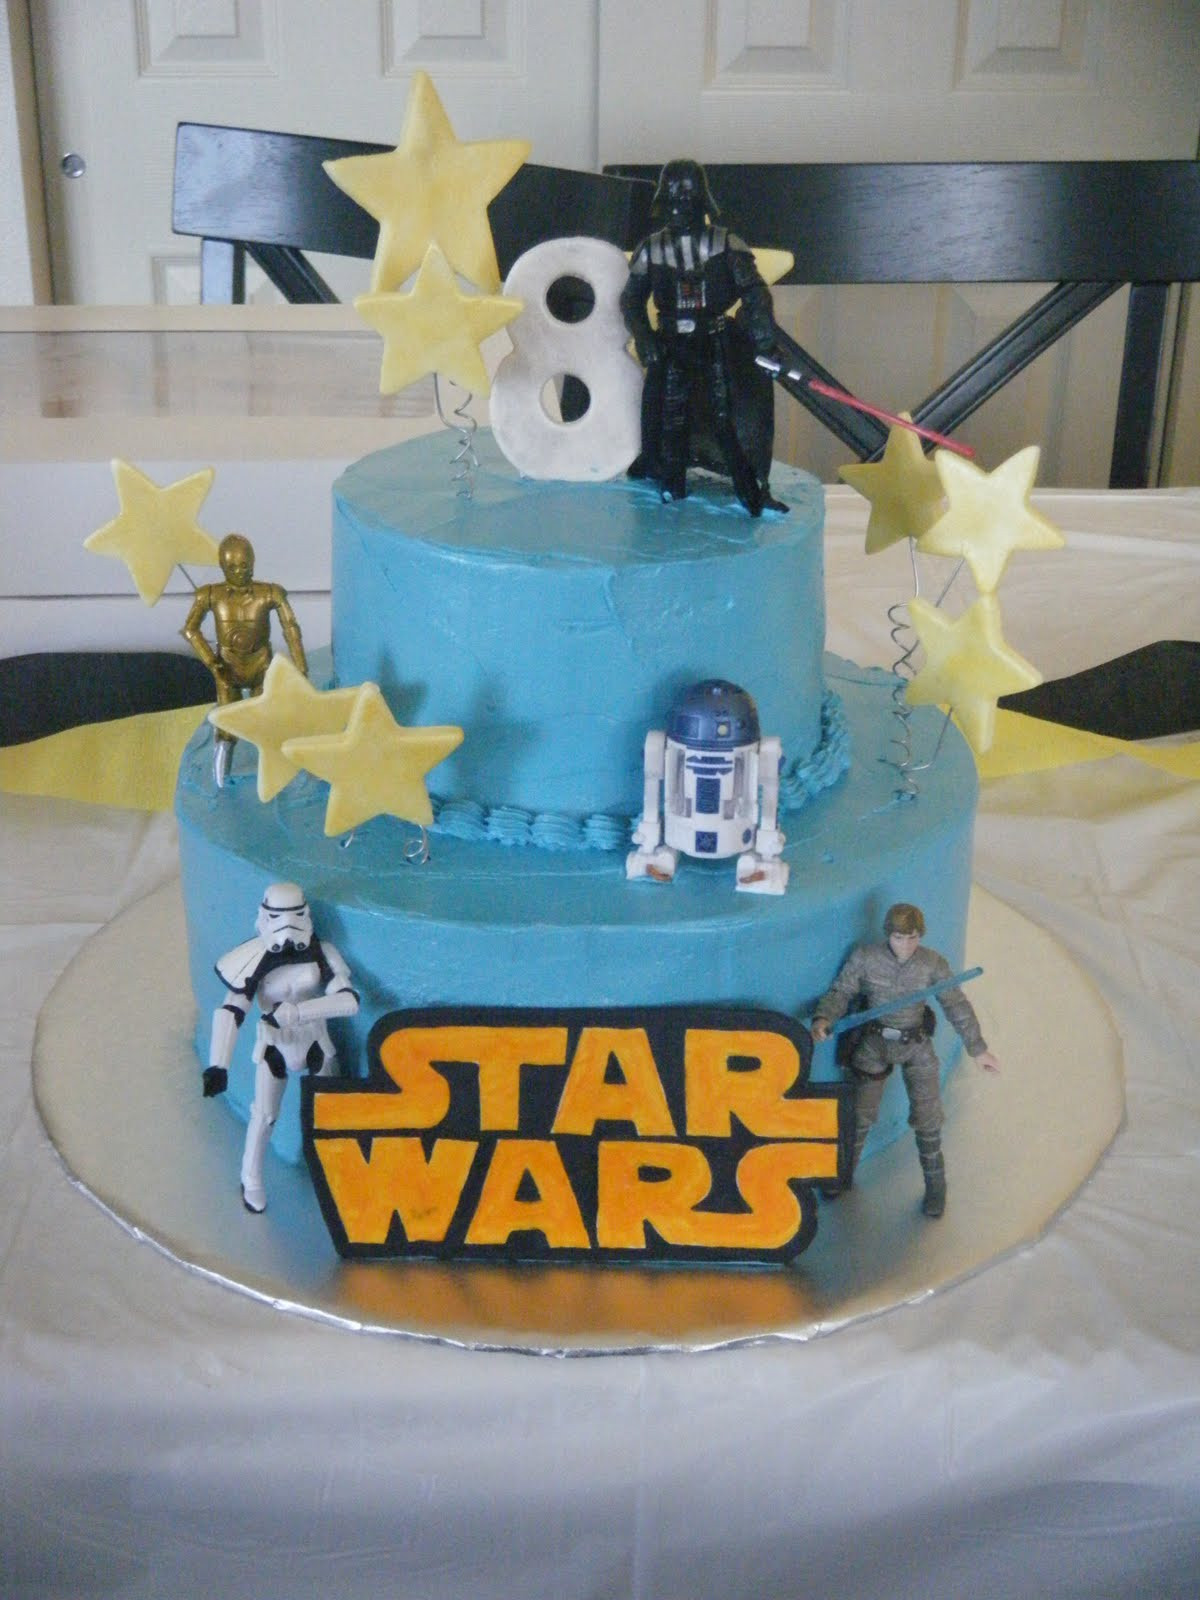 Star Wars Birthday Cake Ideas
 Cakessica Star Wars Birthday Cake